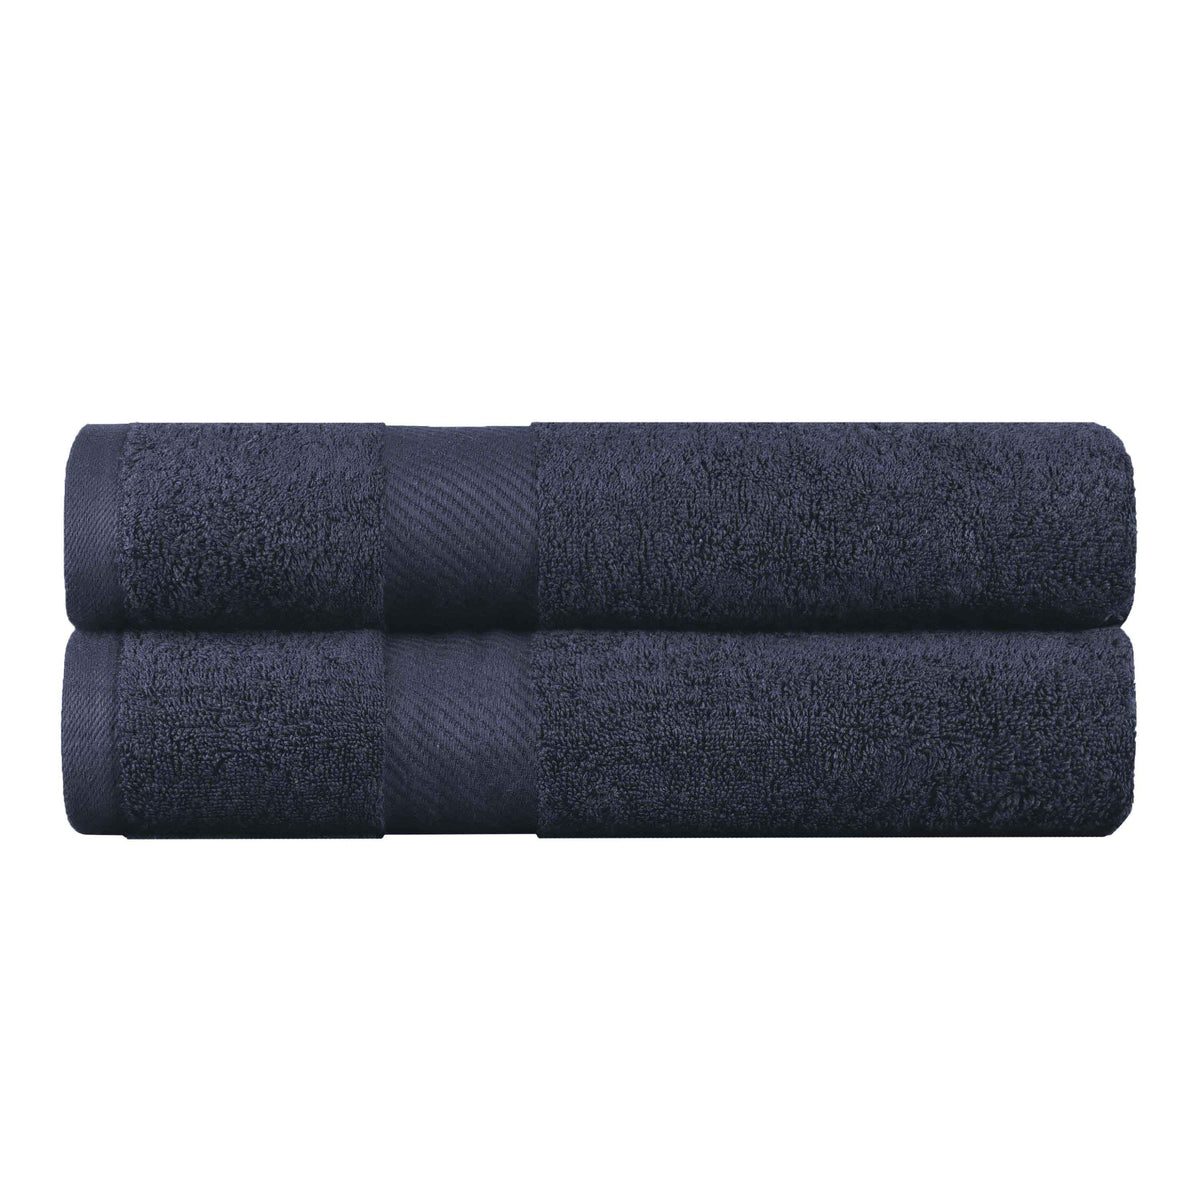 Kendell Egyptian Cotton Solid Medium Weight Bath Towel Set of 2 - Black